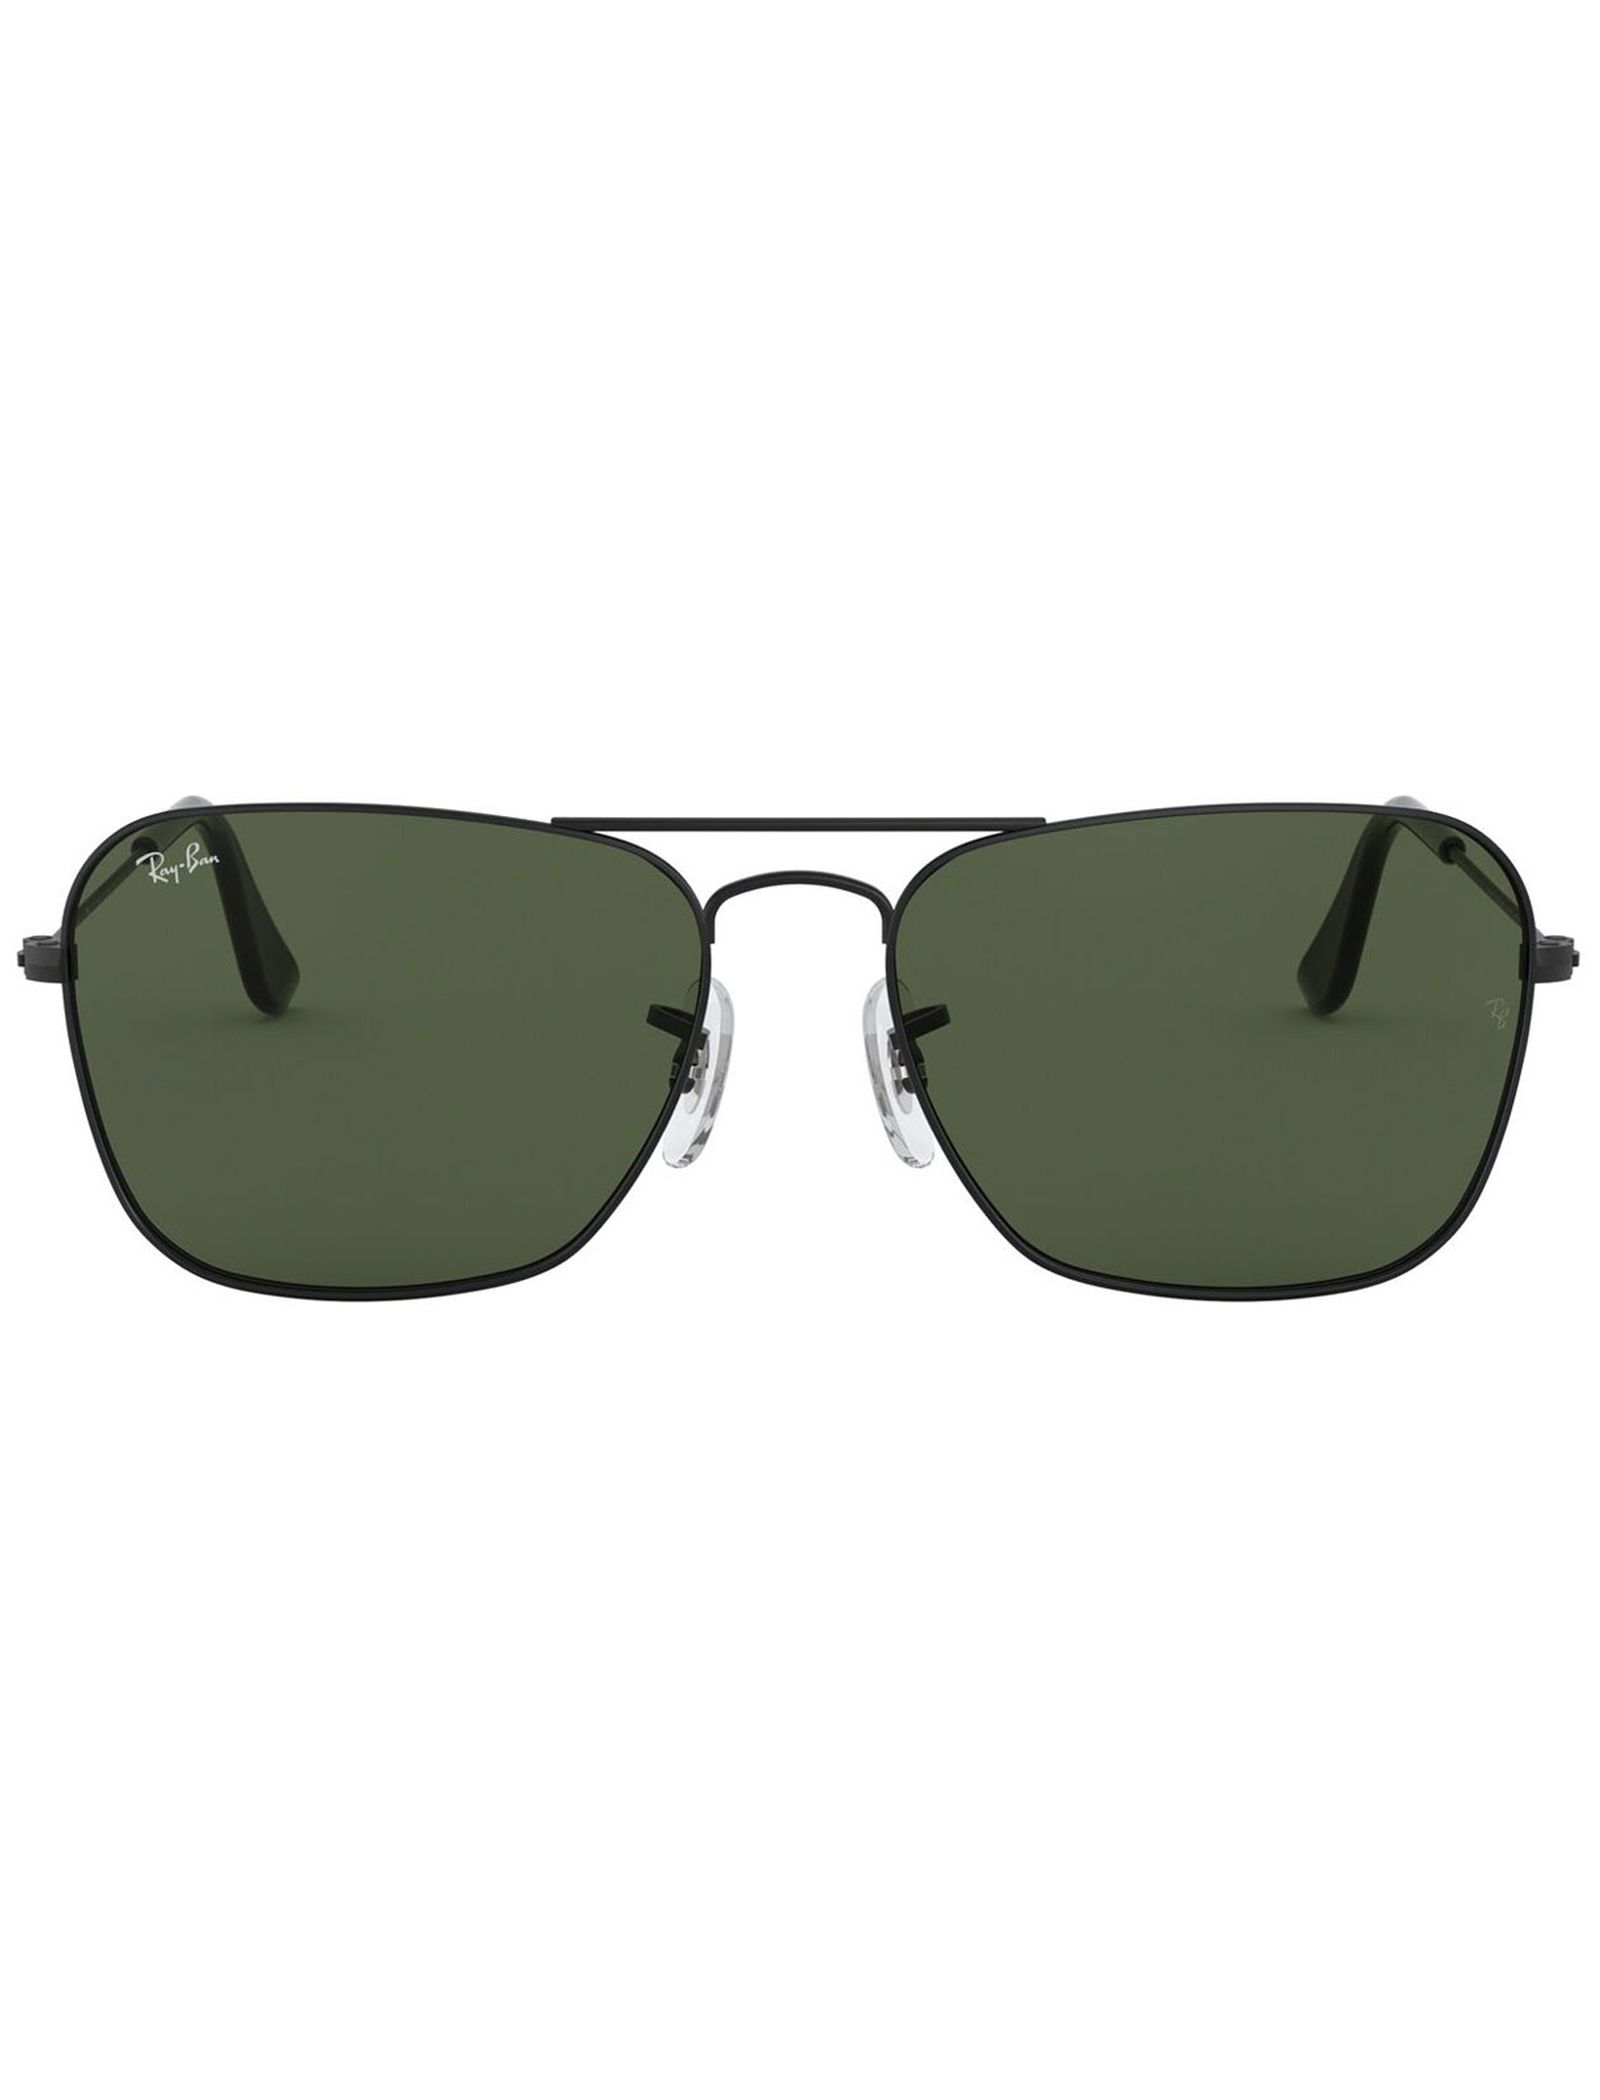 عینک آفتابی ری بن مدل 3136-002-58 - مشکی - 2